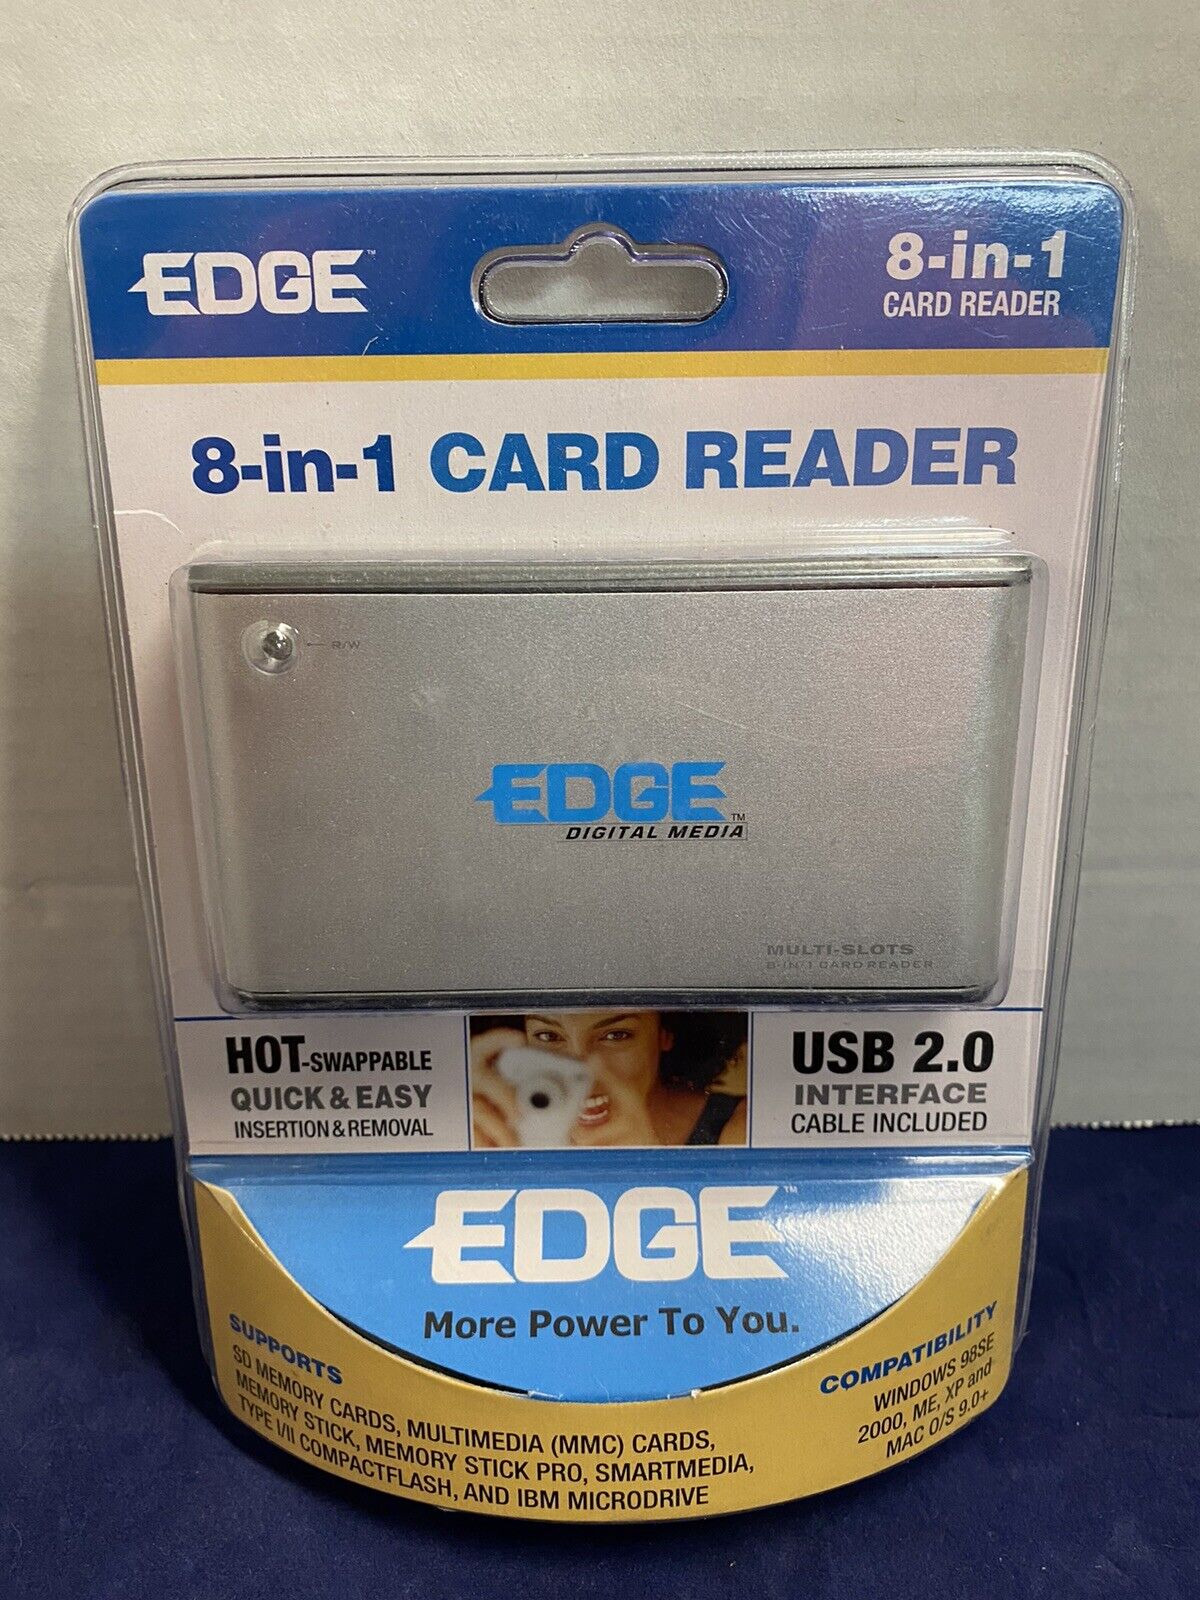 Edge Digital Media Multi-Slots 8 in 1 Card Reader USB 2.0 New in sealed package